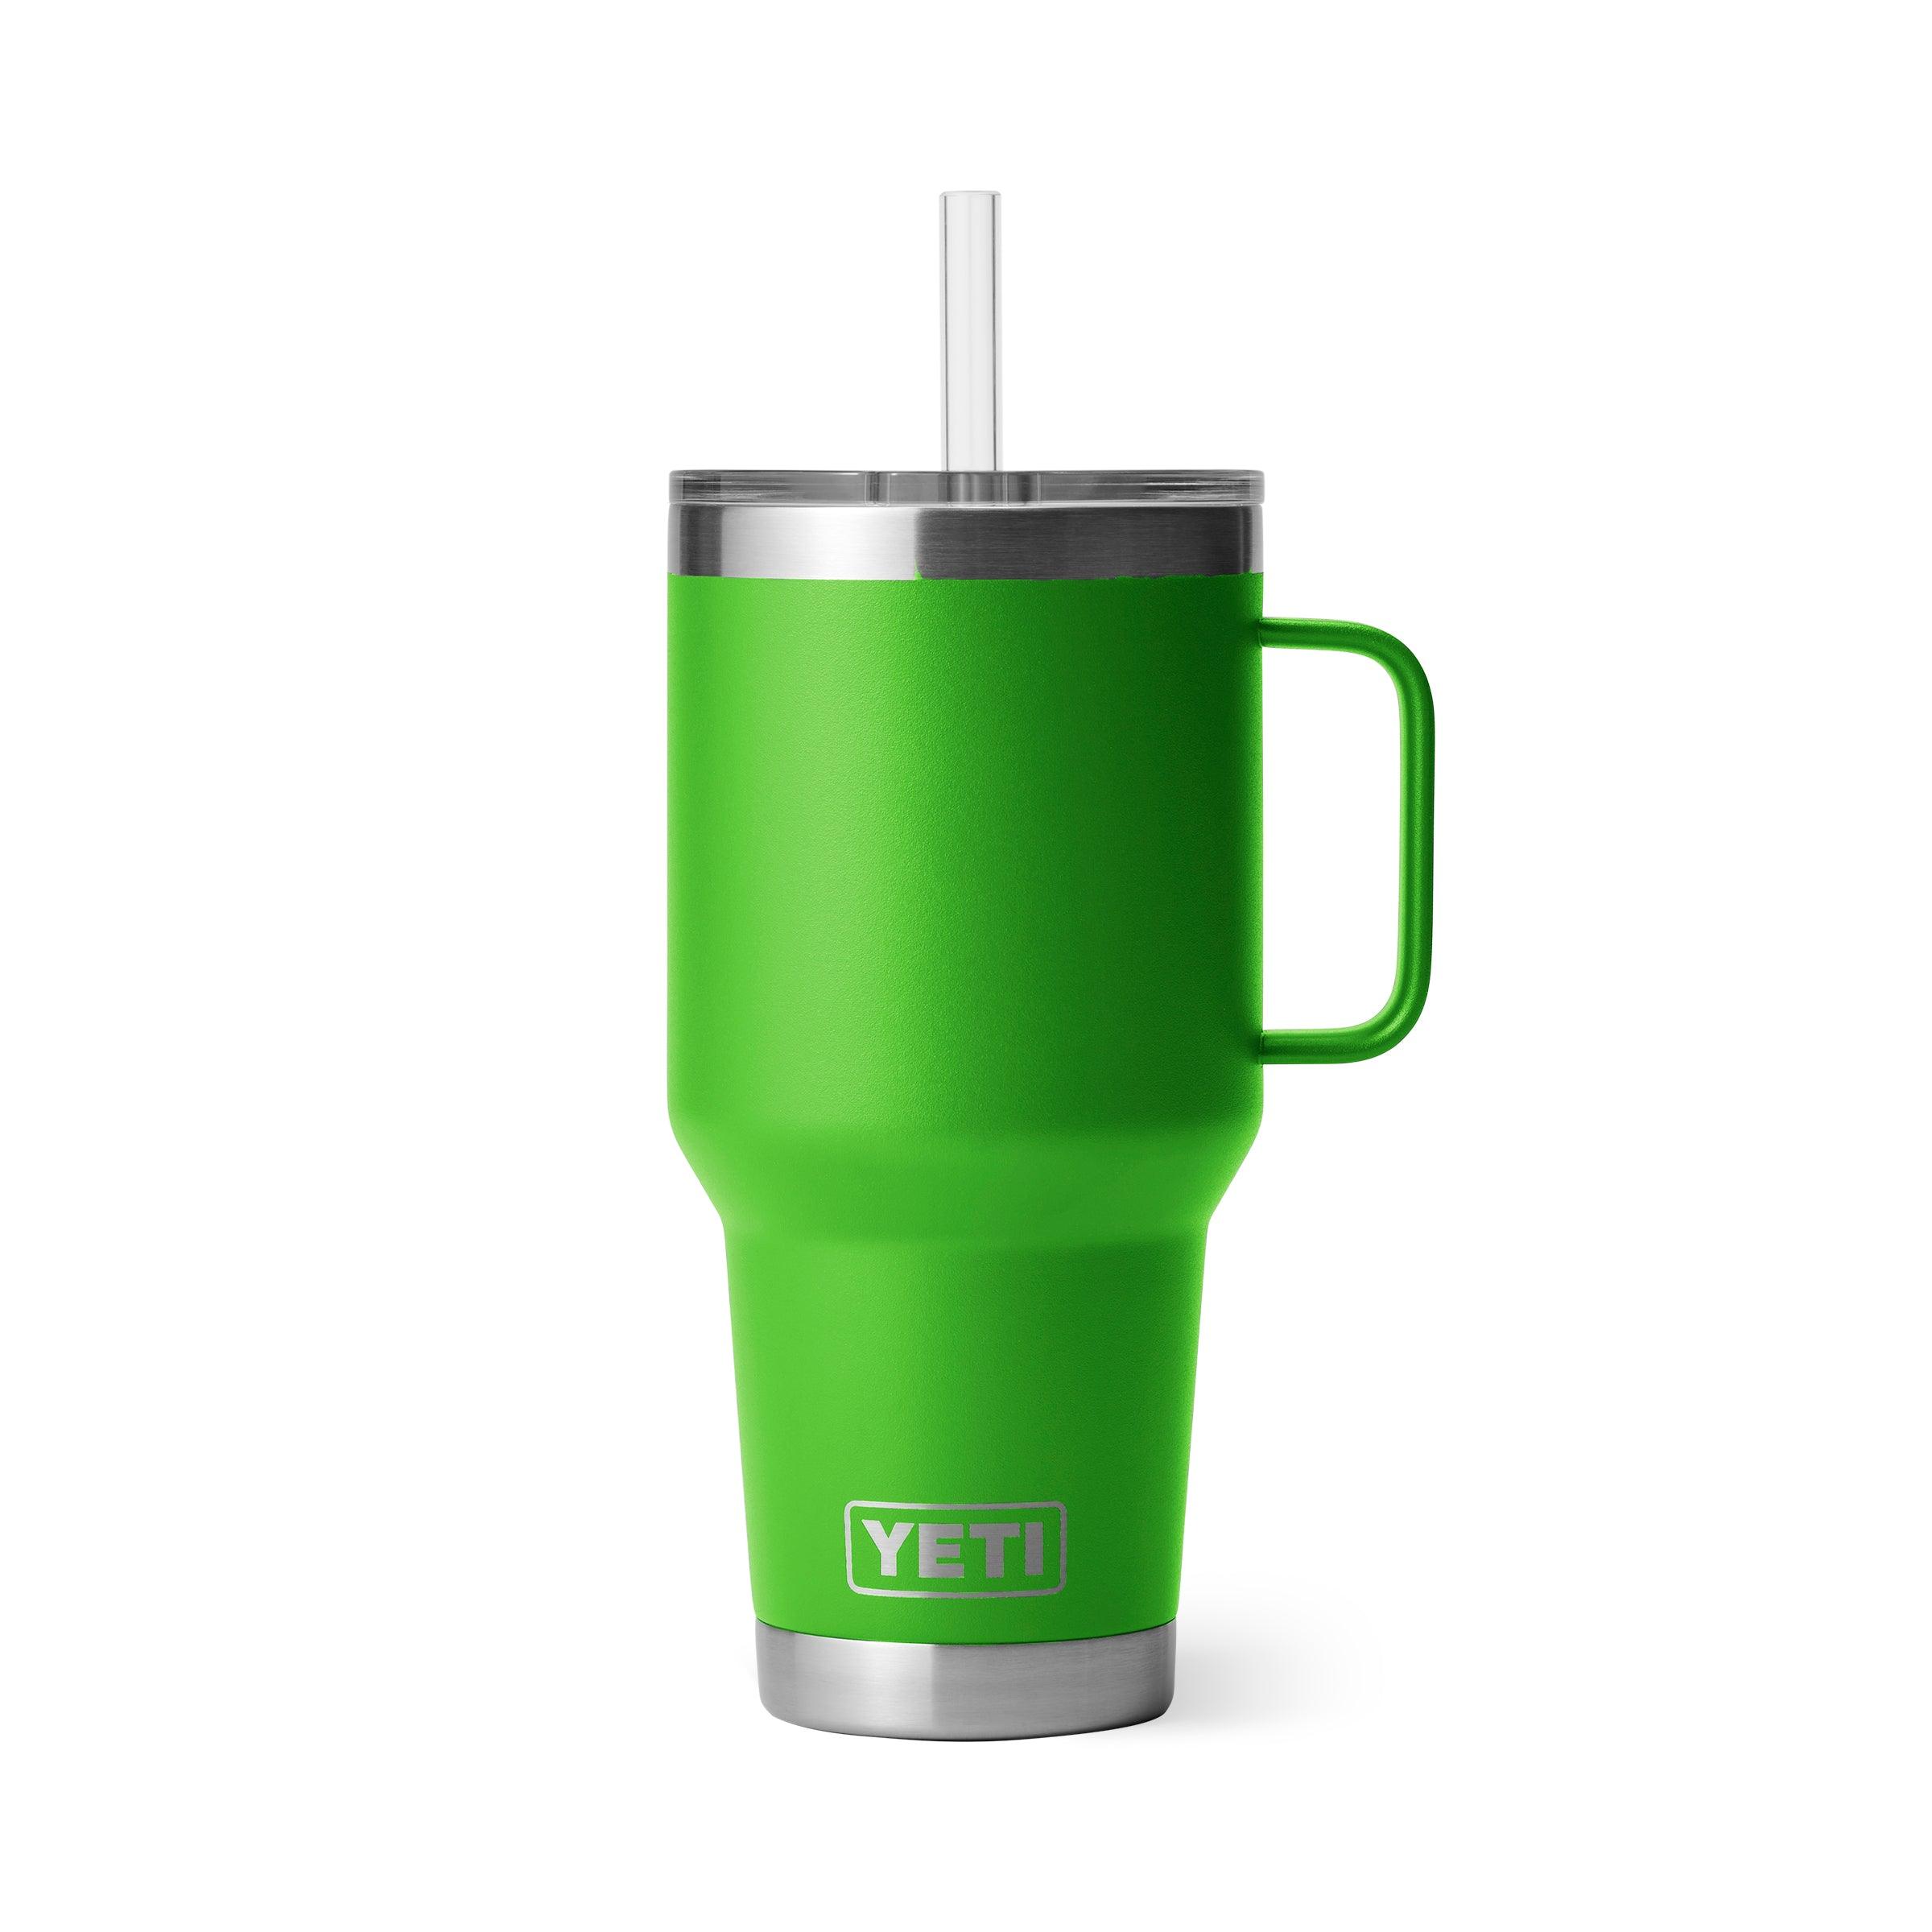 New Yeti Rambler Mug with Straw Lid launch: Why it's worth it